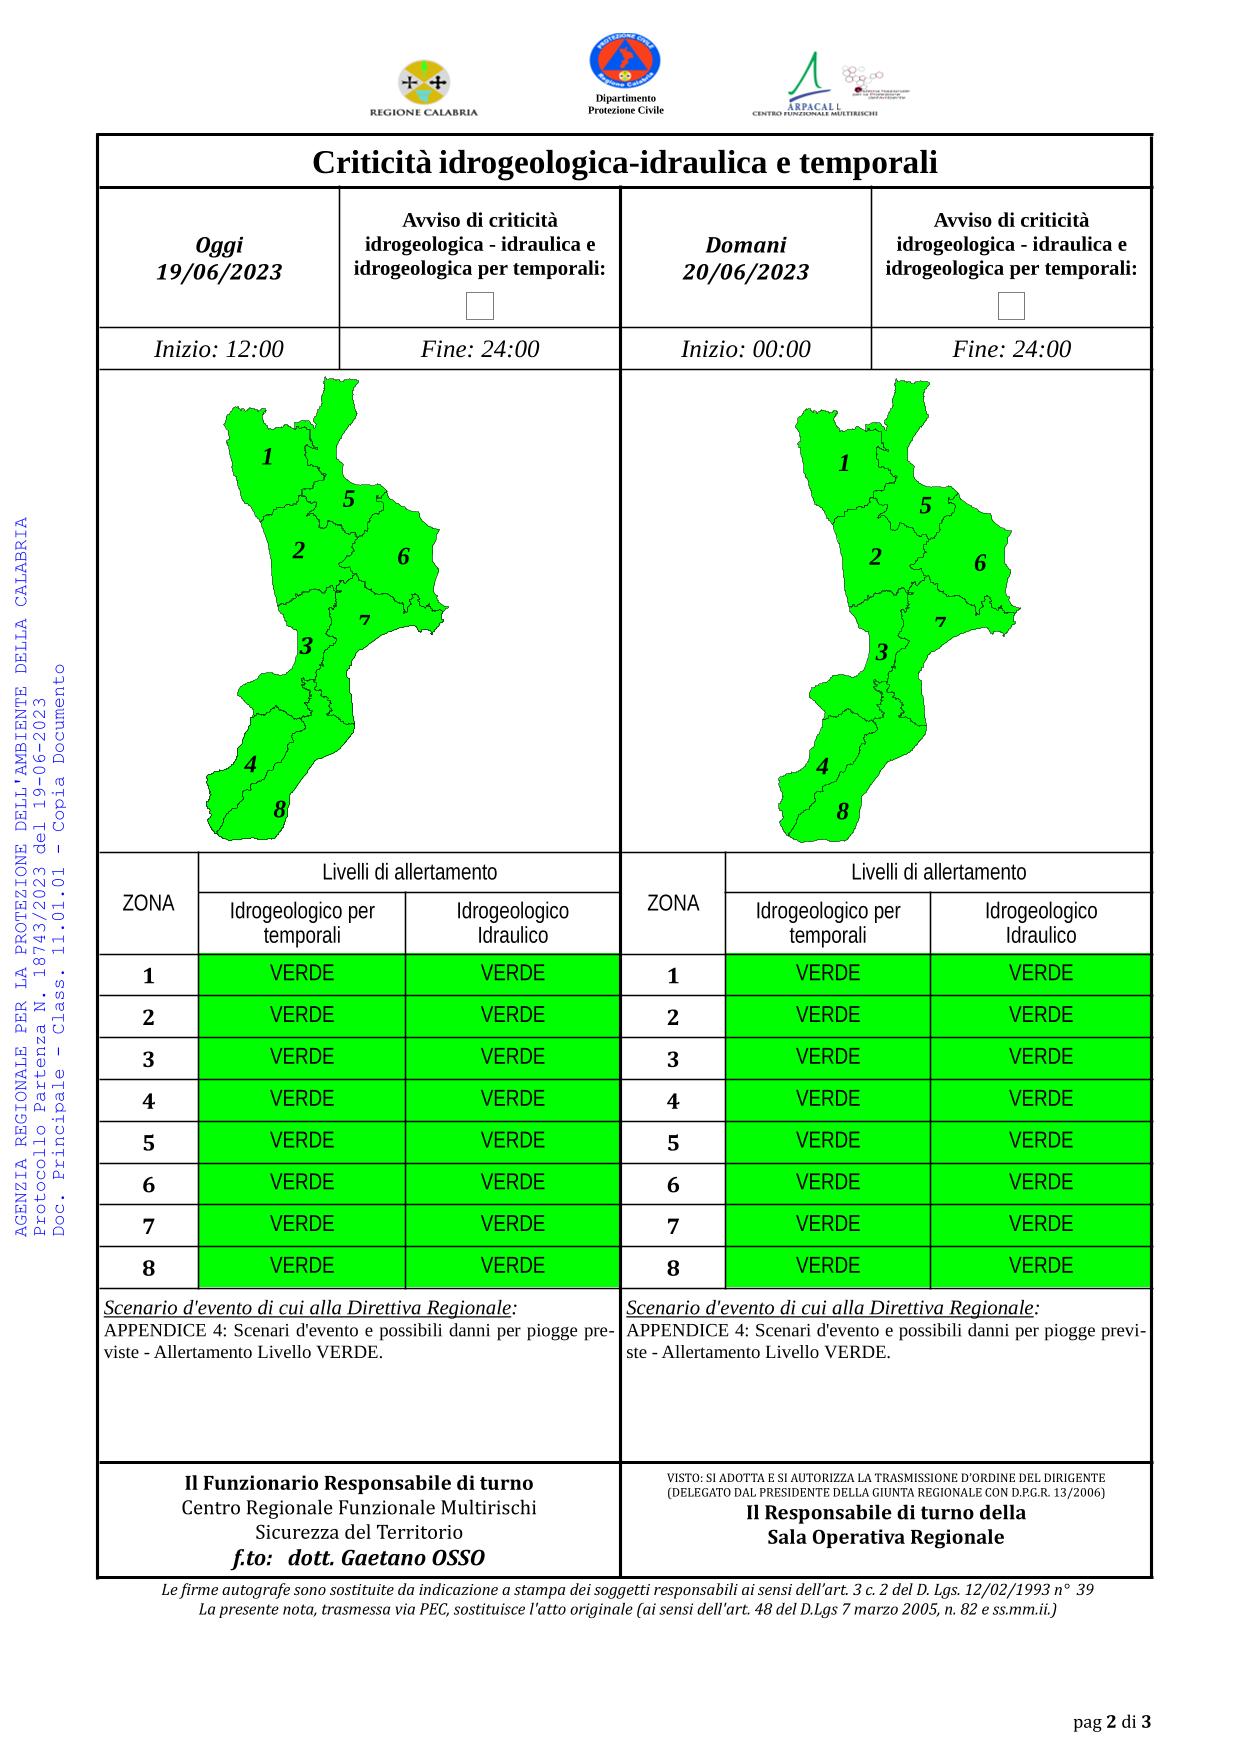 Criticità idrogeologica-idraulica e temporali in Calabria 19-06-2023